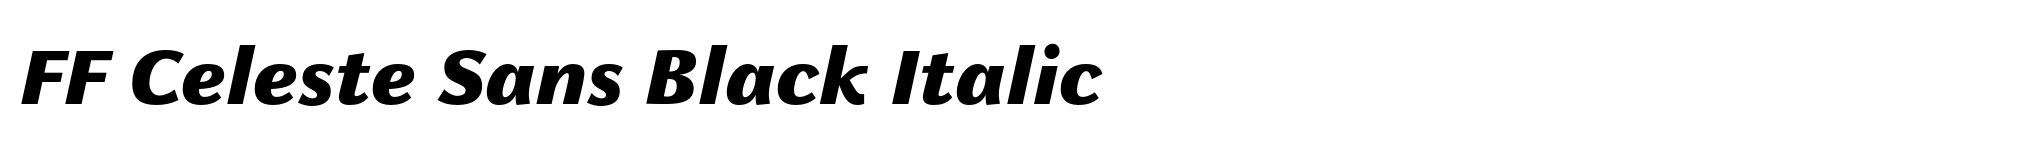 FF Celeste Sans Black Italic image